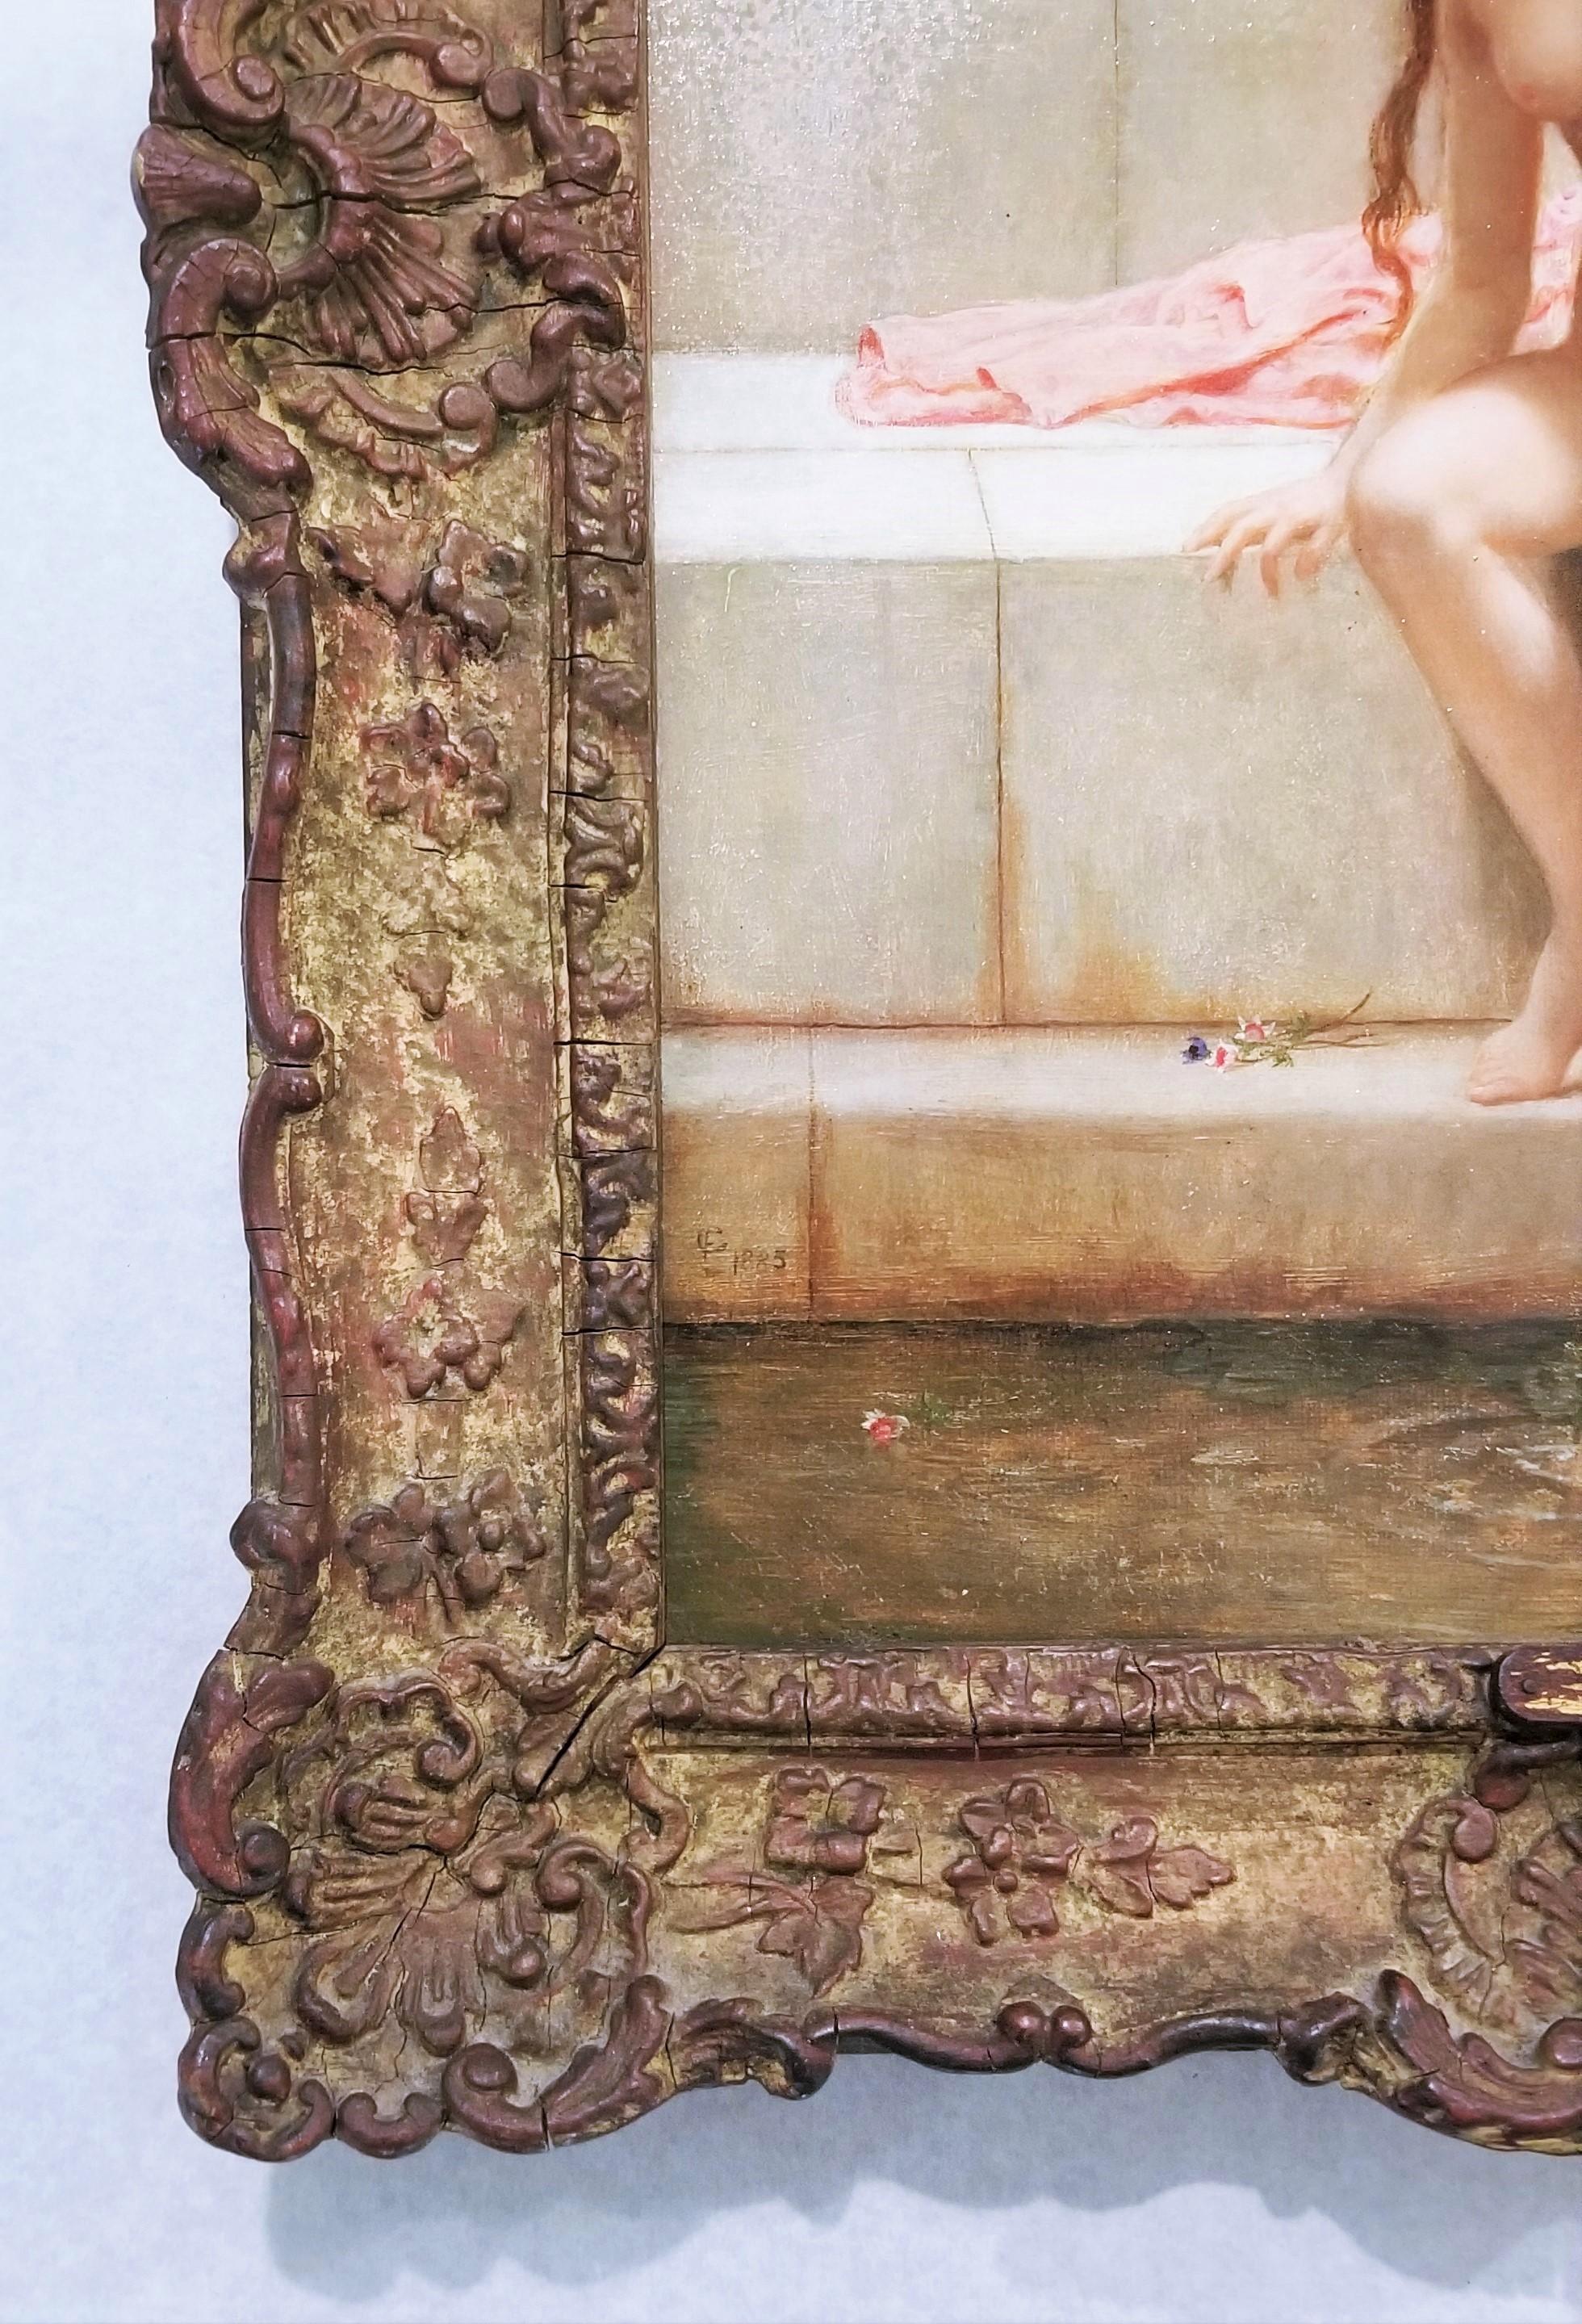 Susannah (Without the Elders) /// Old Masters British Nude Bath histoire biblique - Victorien Painting par Frederick Goodall R.A.